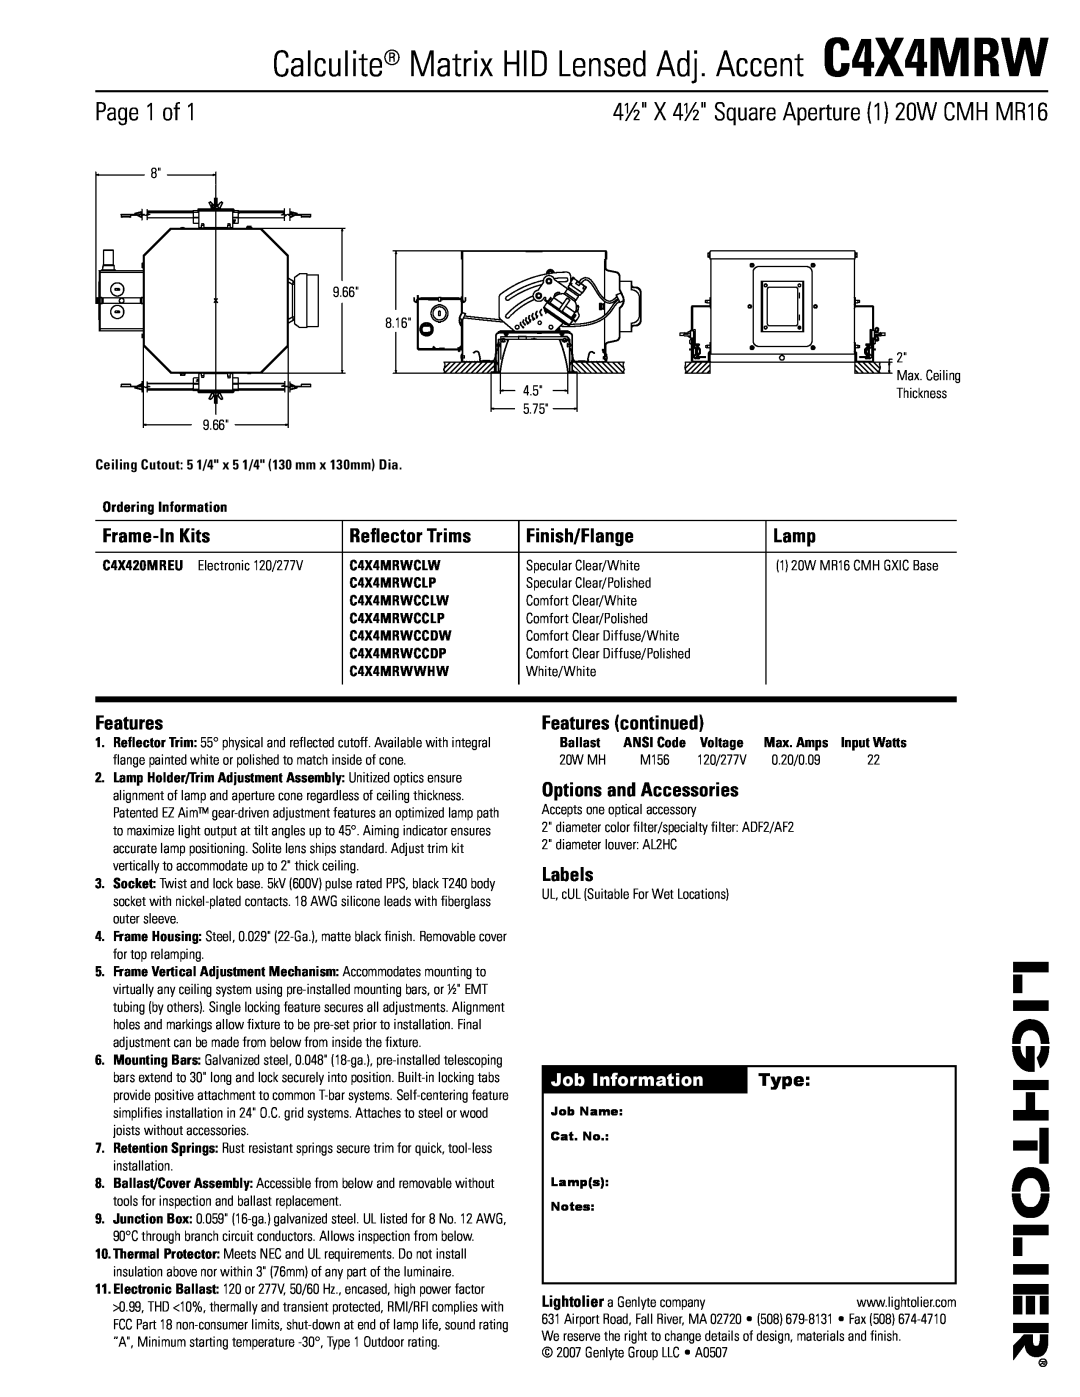 Lightolier C4X4MRWCLW manual Calculite Matrix HID Lensed Adj. Accent C4X4MRW, Page 1 of, Job Information, Type, Lamp 